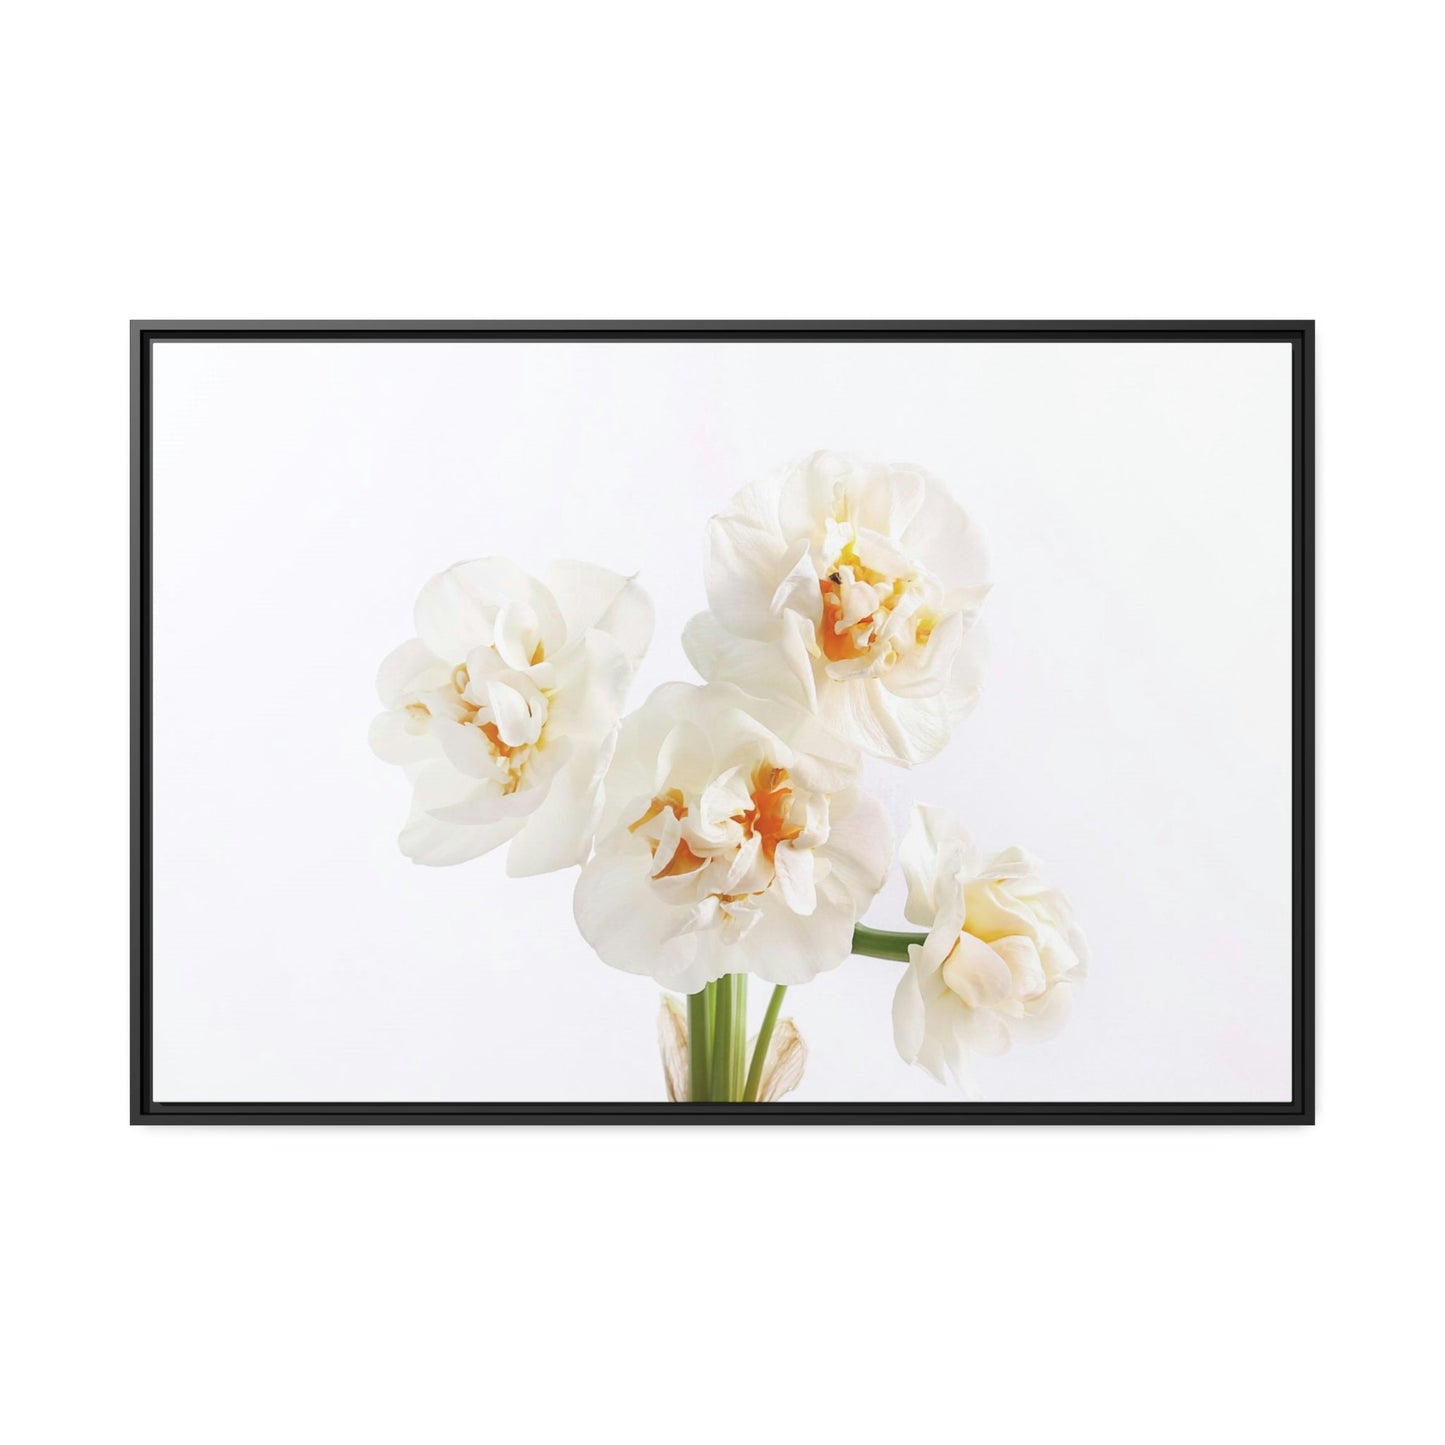 Daffodil Harmony: A Peaceful Palette